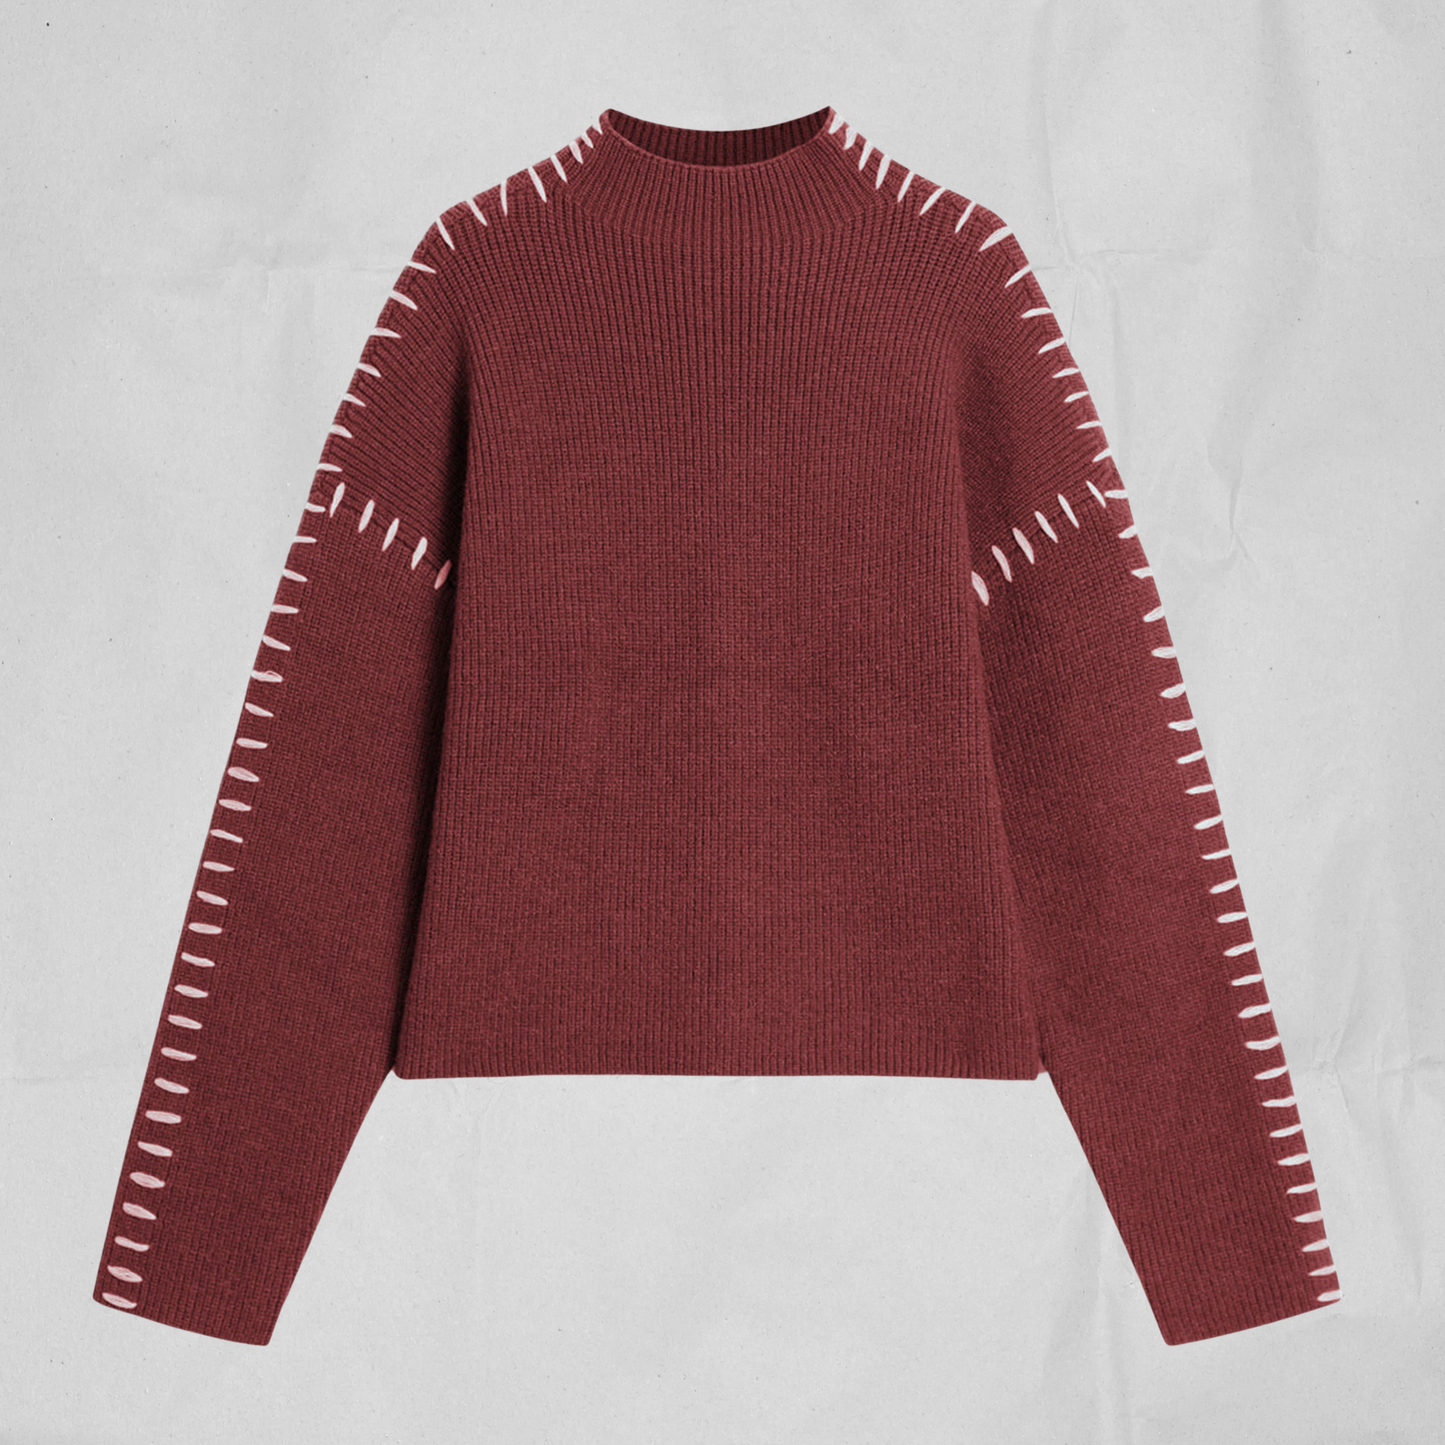 SeekMe Ladies Mock Neck Contrast Stitching Sweater